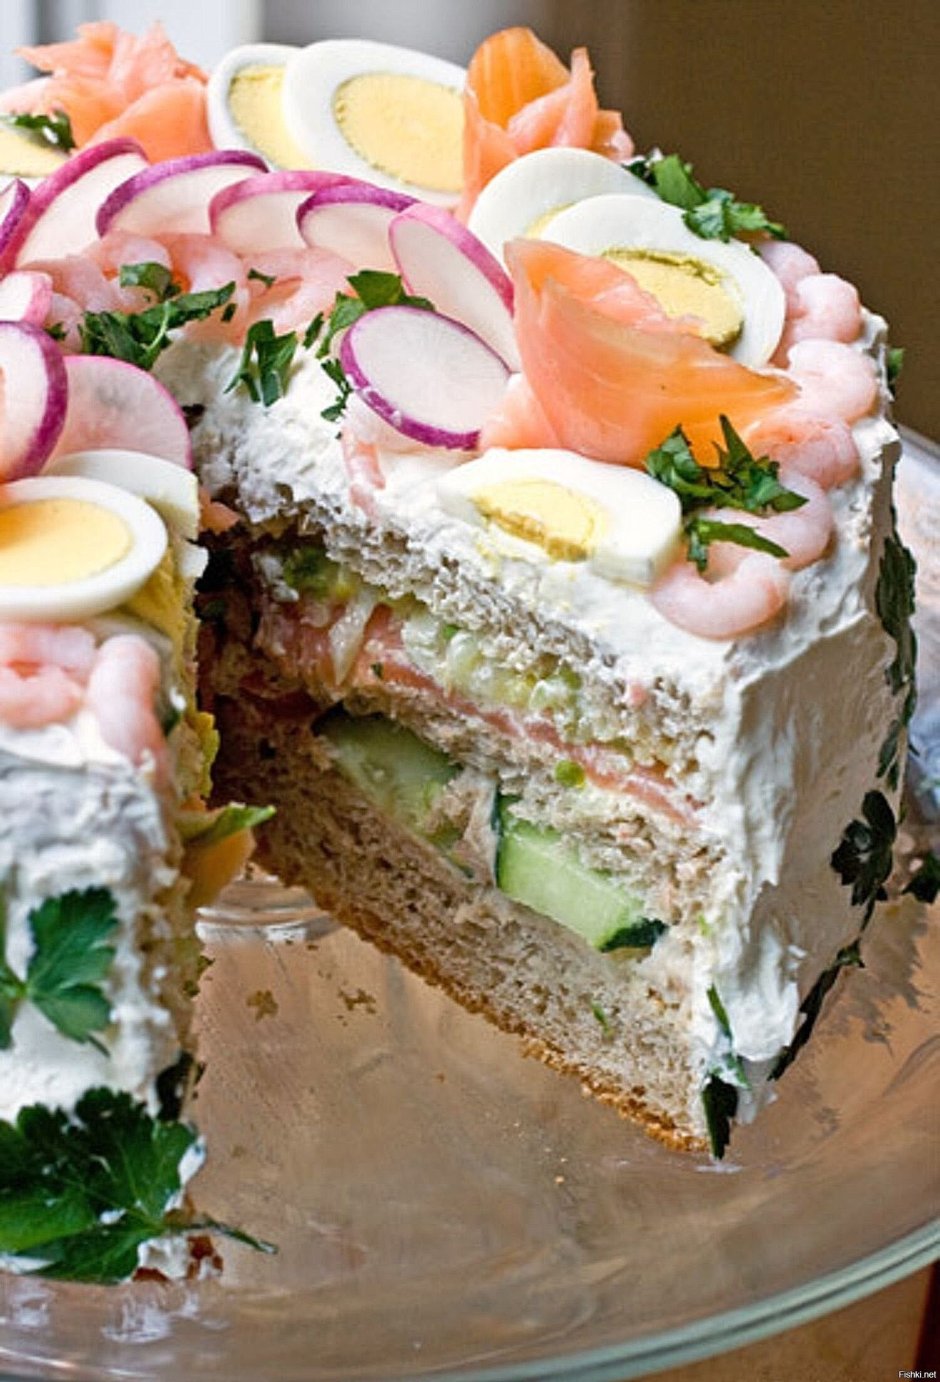 Шведский закусочный торт smörgåstårta смёргасторте